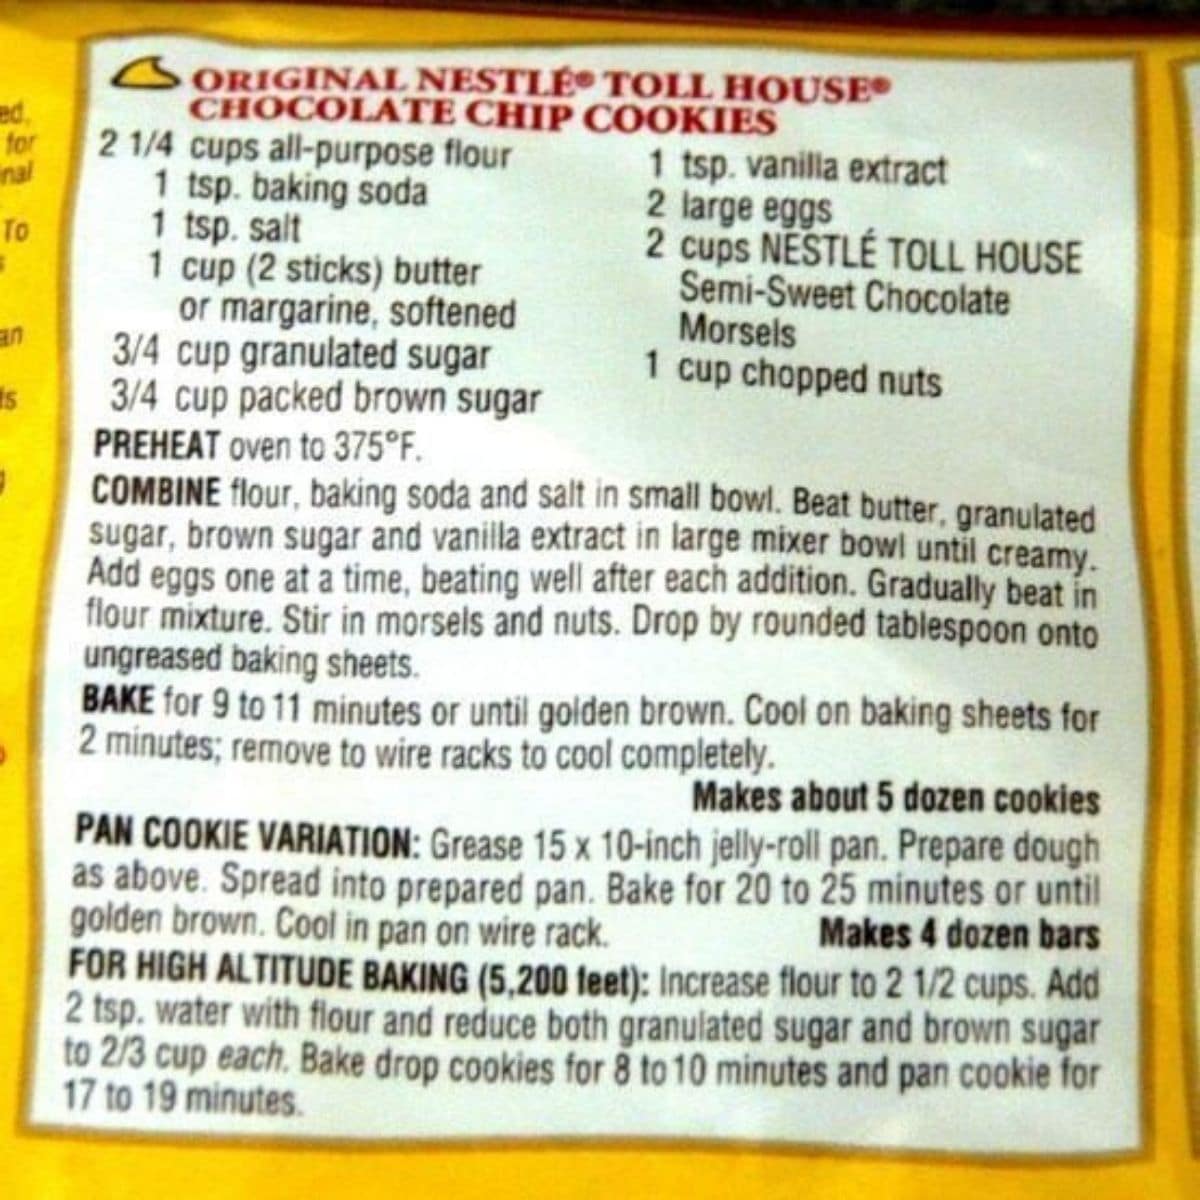 Chocolate chip cookie box recipe.